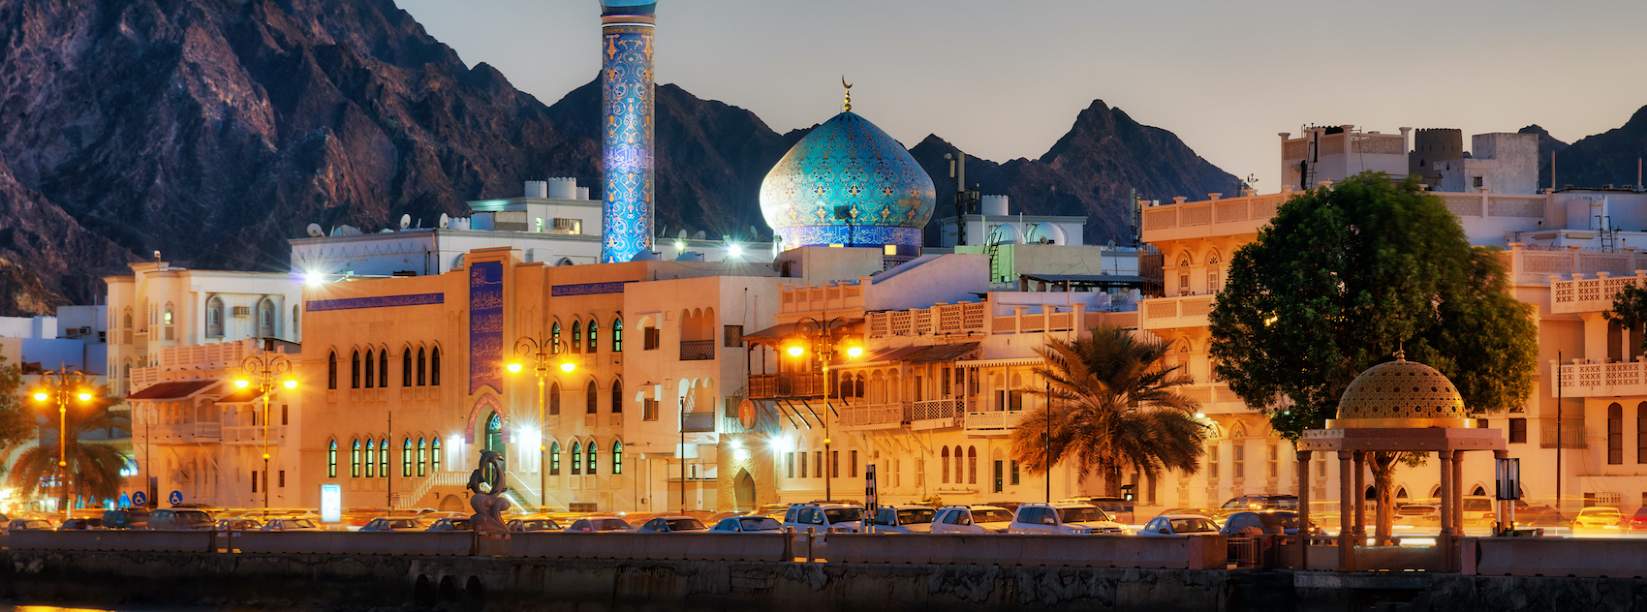 Muttrah Corniche, Muscat, Oman